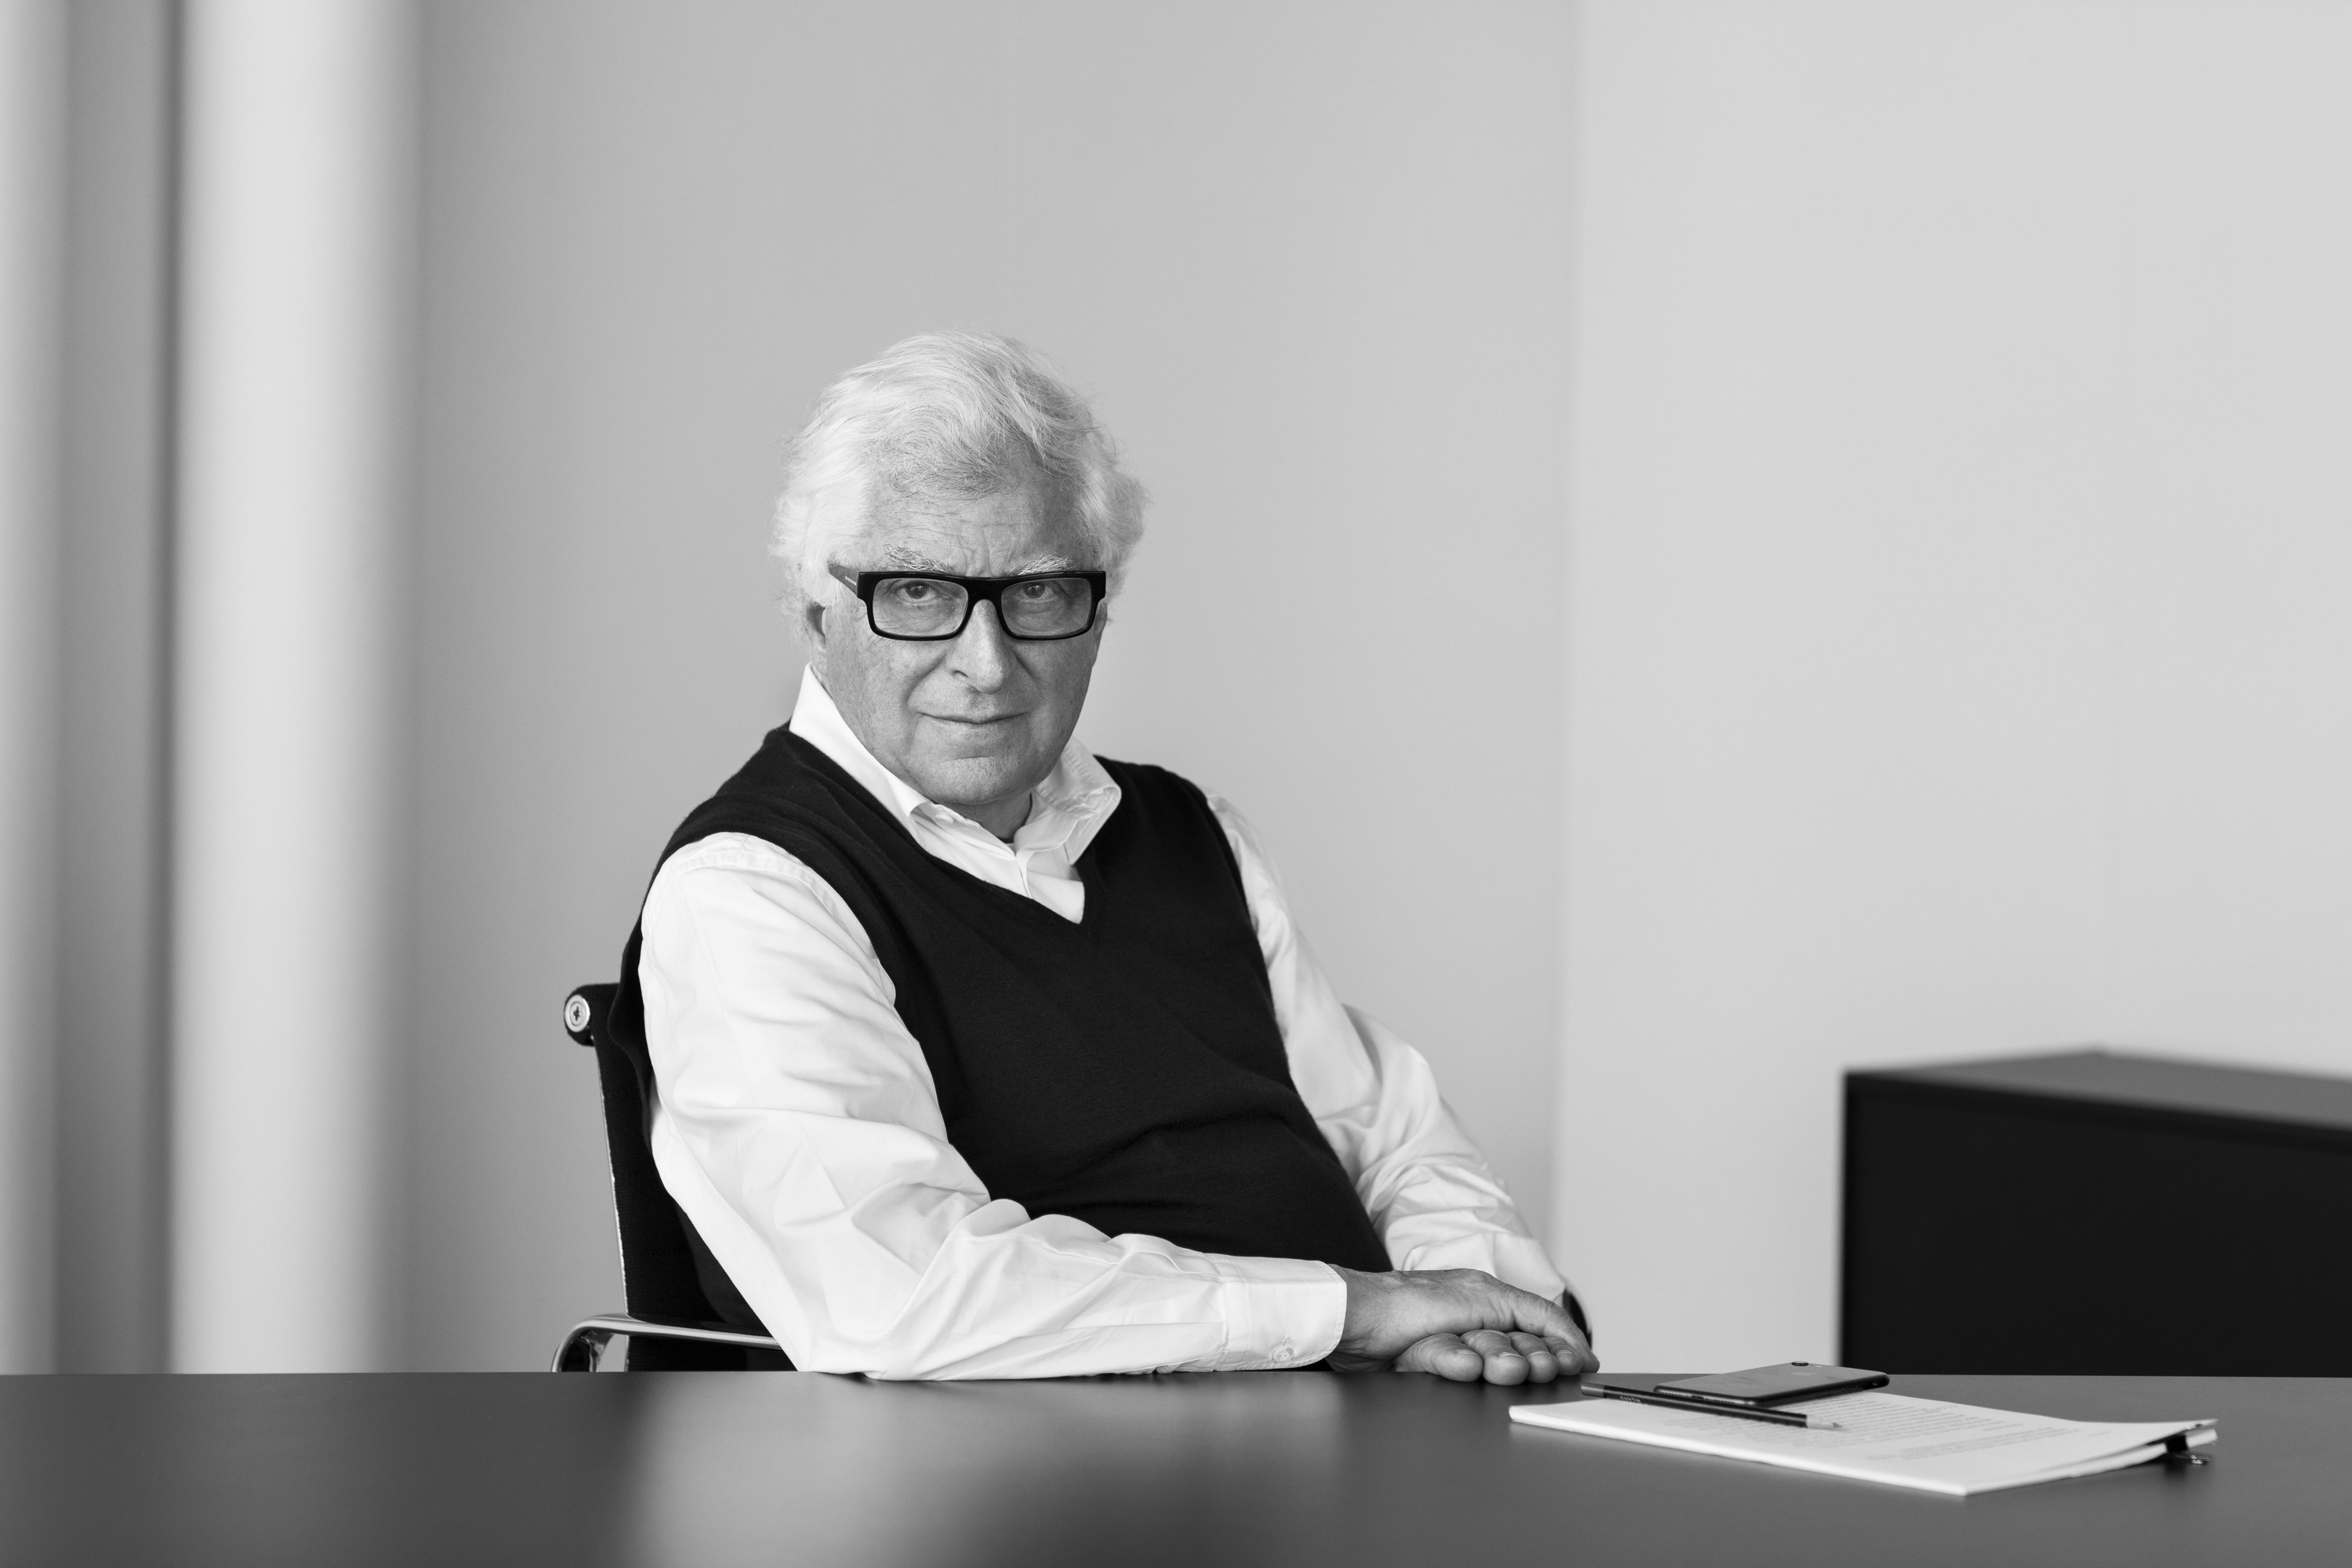 Patrizio Bertelli, CEO of Prada